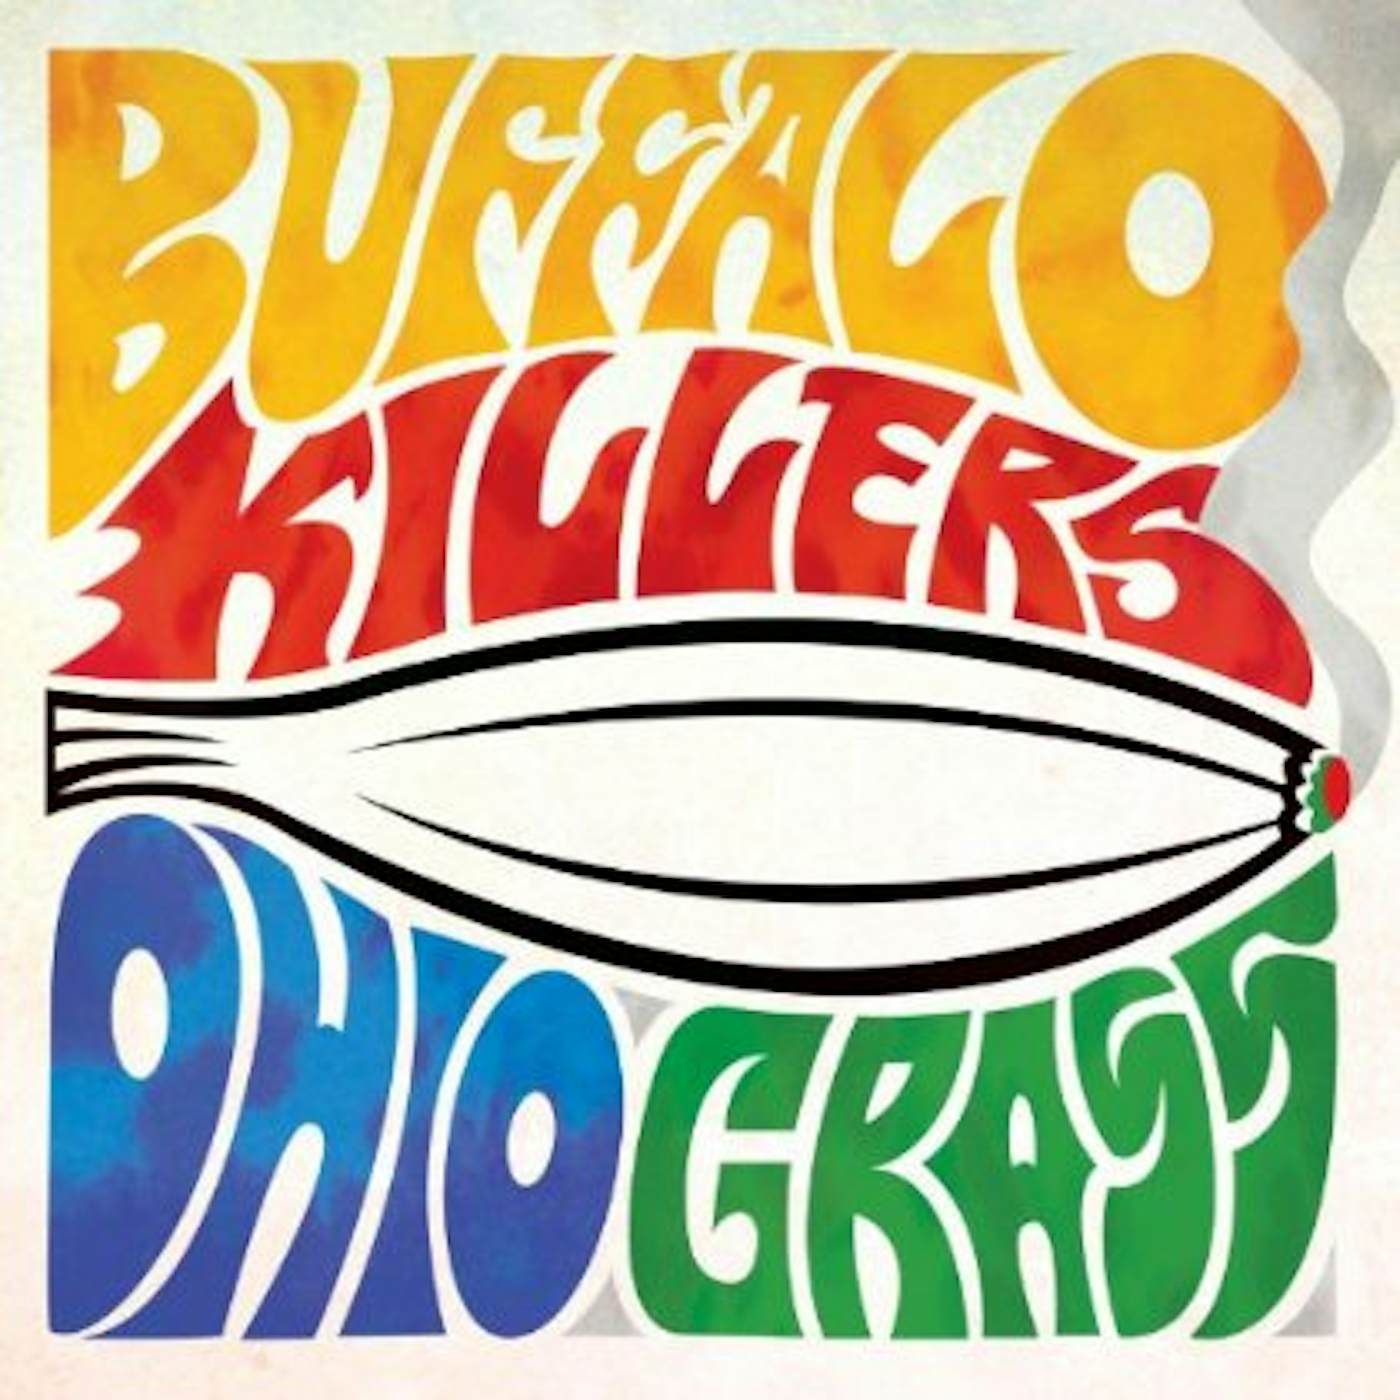 Buffalo Killers Ohio Grass Vinyl Record